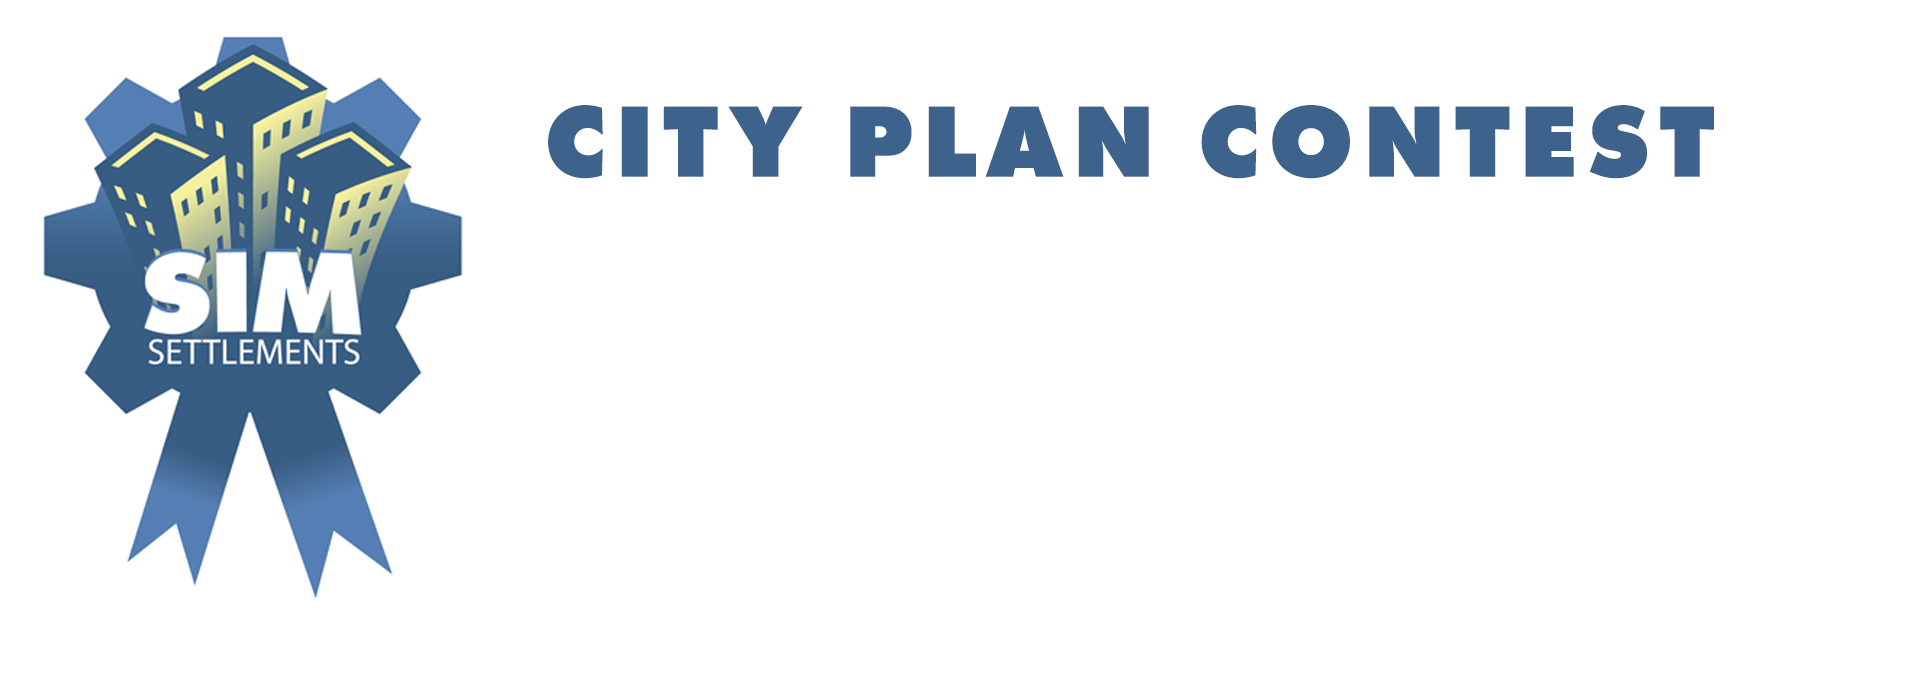 CityPlanContest_Body.png